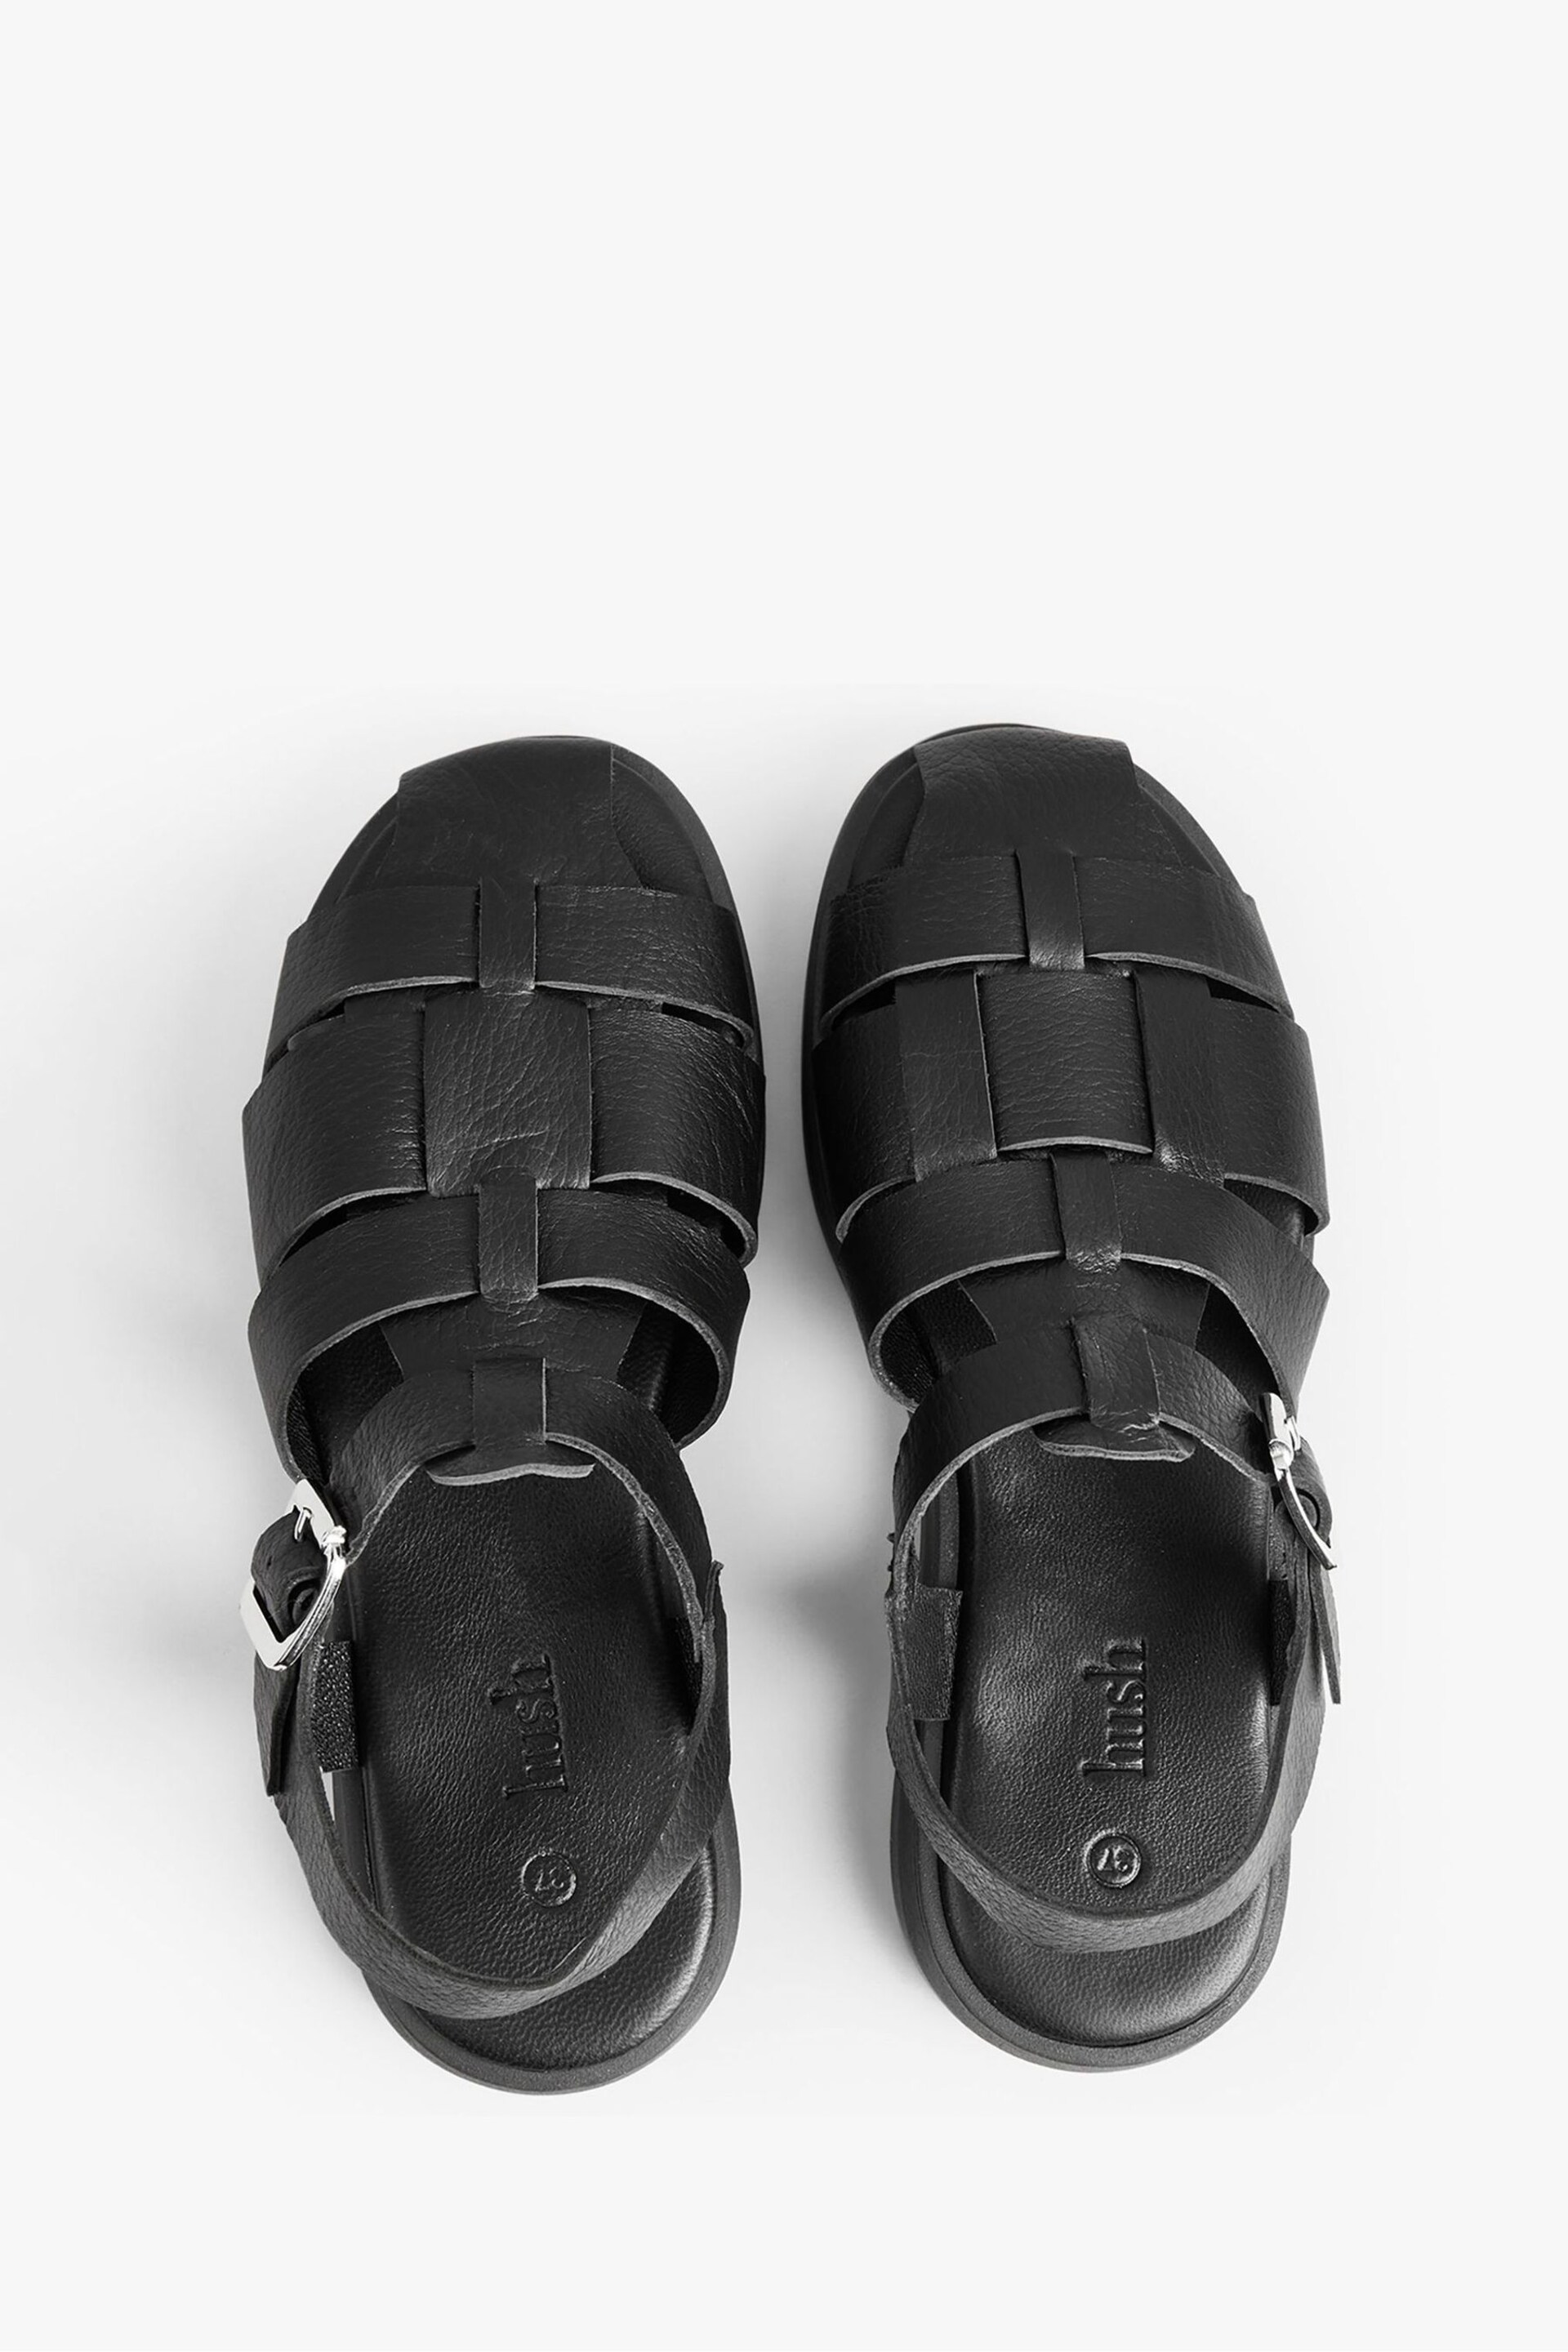 Hush Black Brisa Leather Sandals - Image 3 of 5